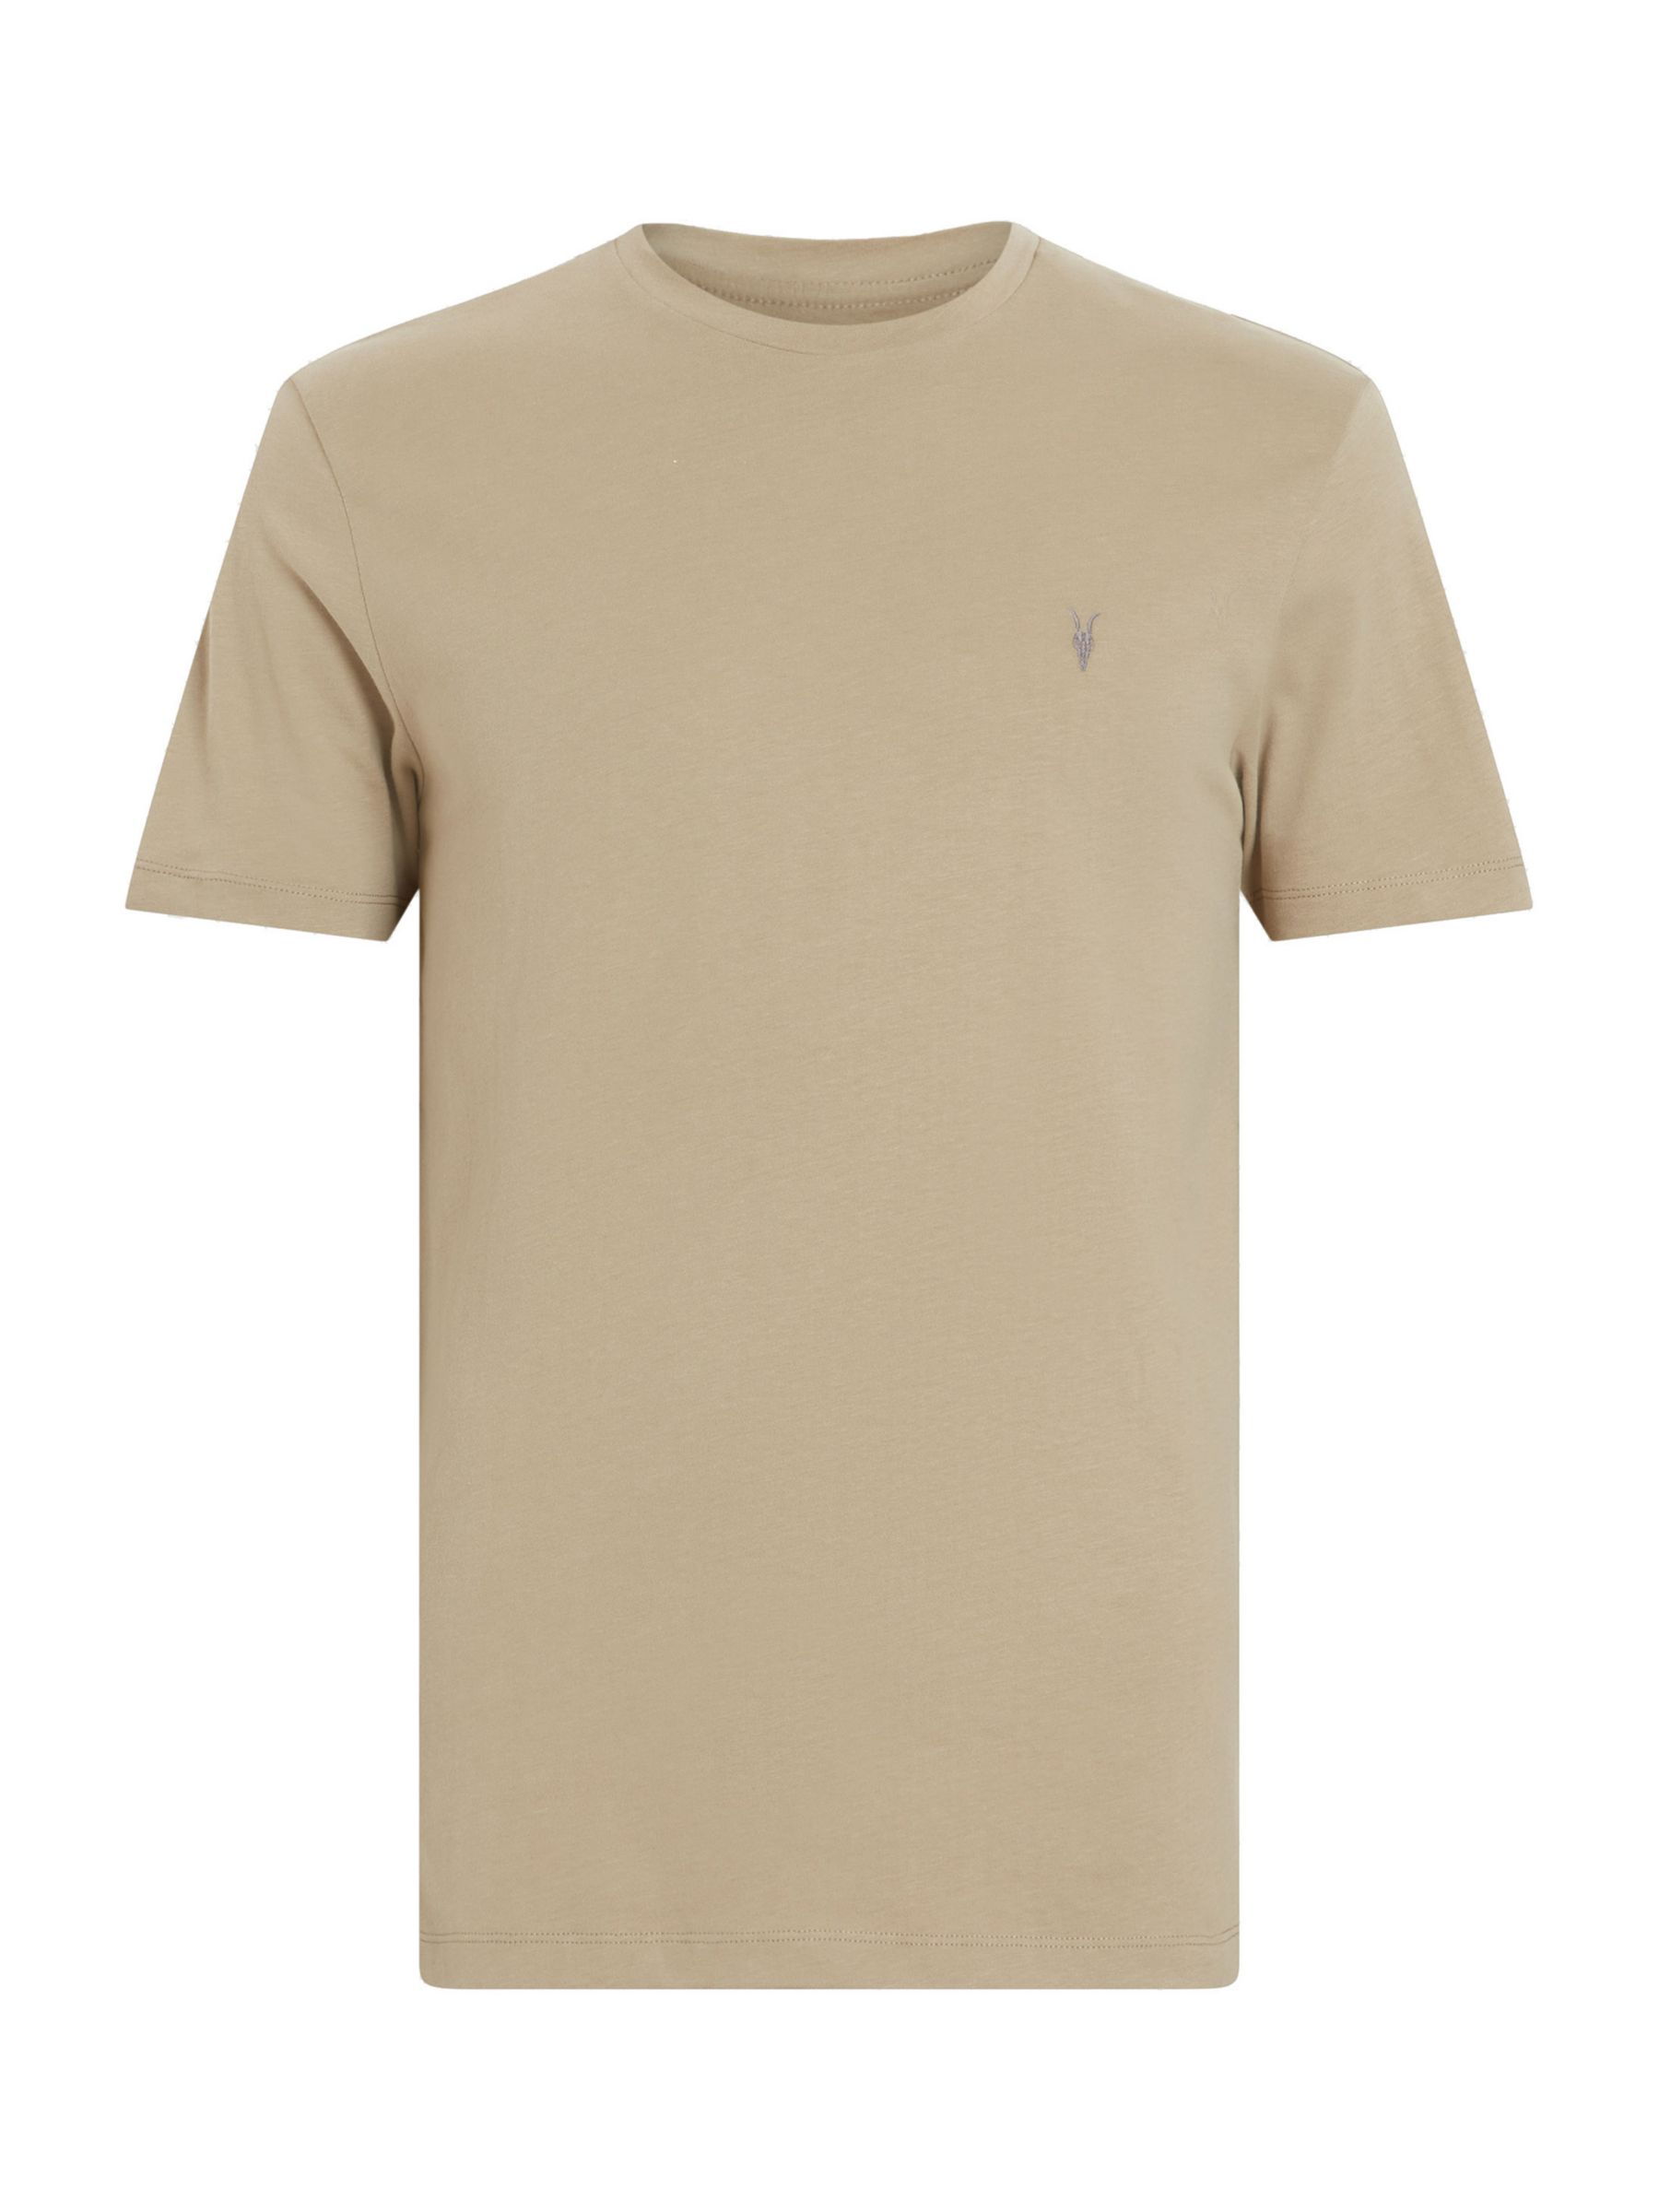 AllSaints Brace Contrast Organic Cotton Short Sleeve T-Shirt, Moorland Brown, L